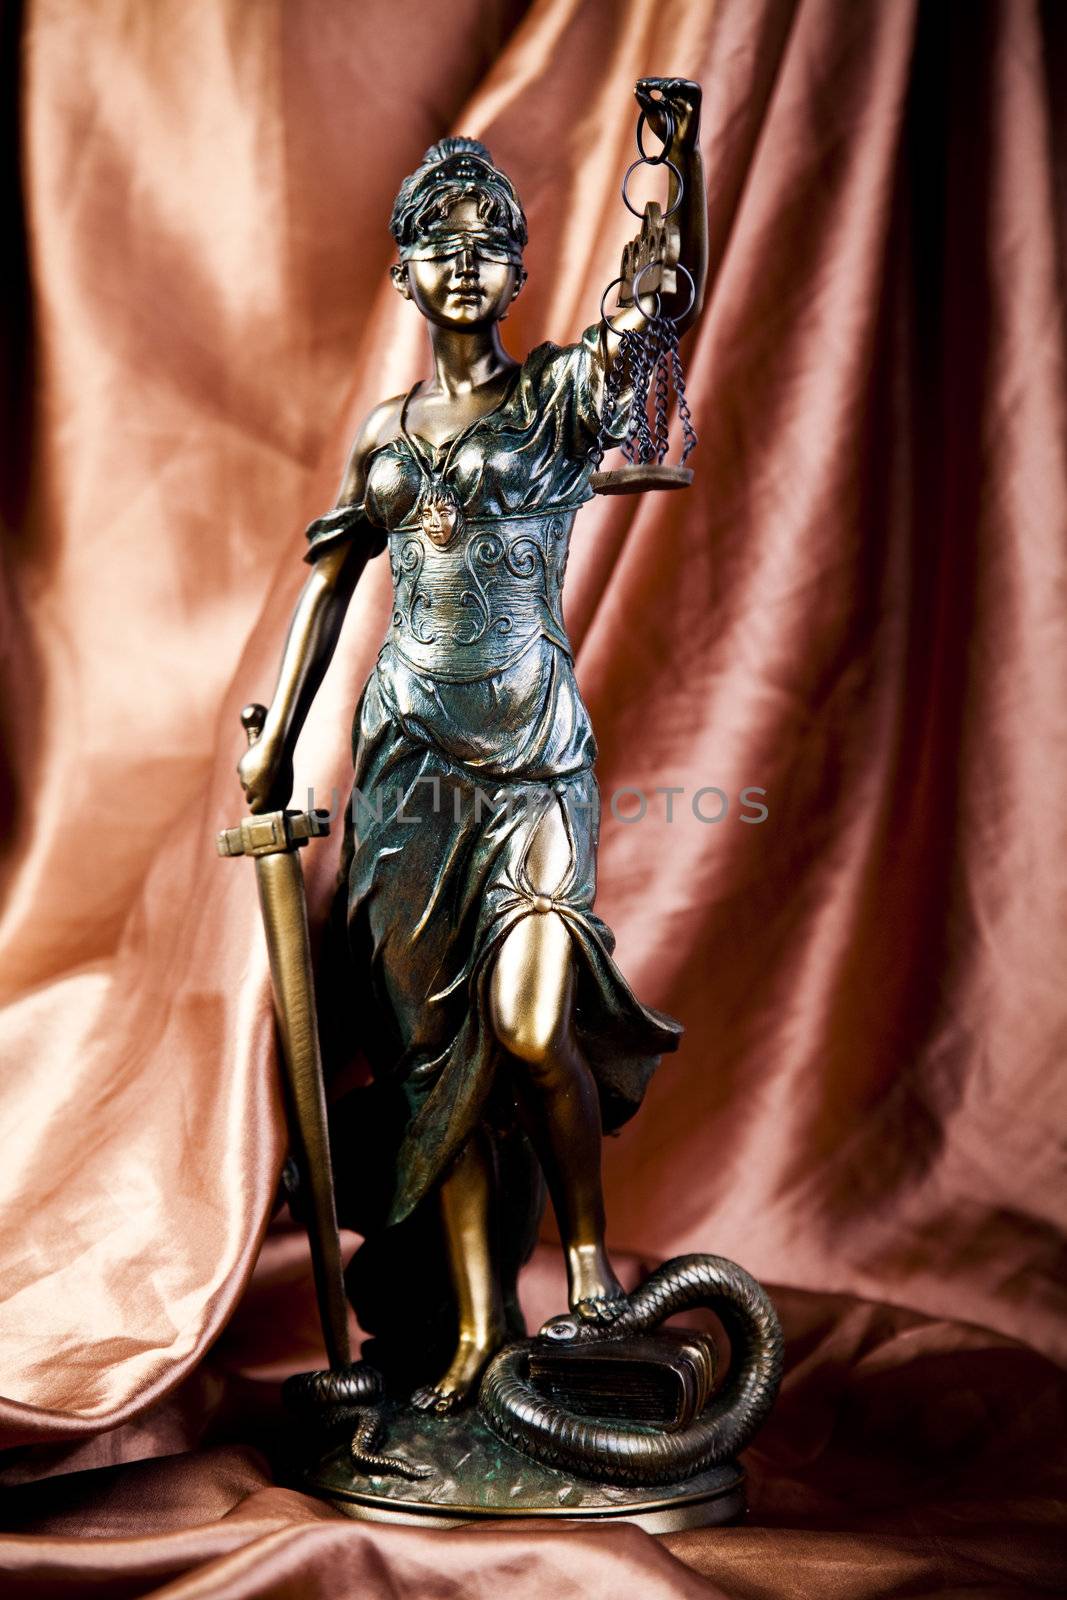 Statue of lady justice by JanPietruszka